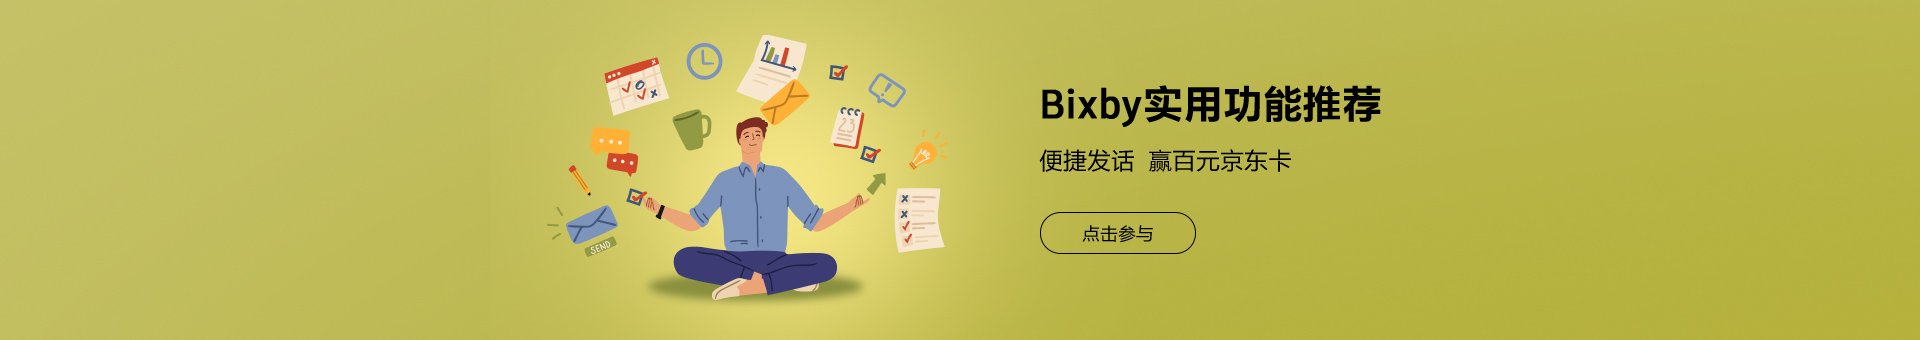 Bixby實用功能推薦 便捷發話贏百元京東卡